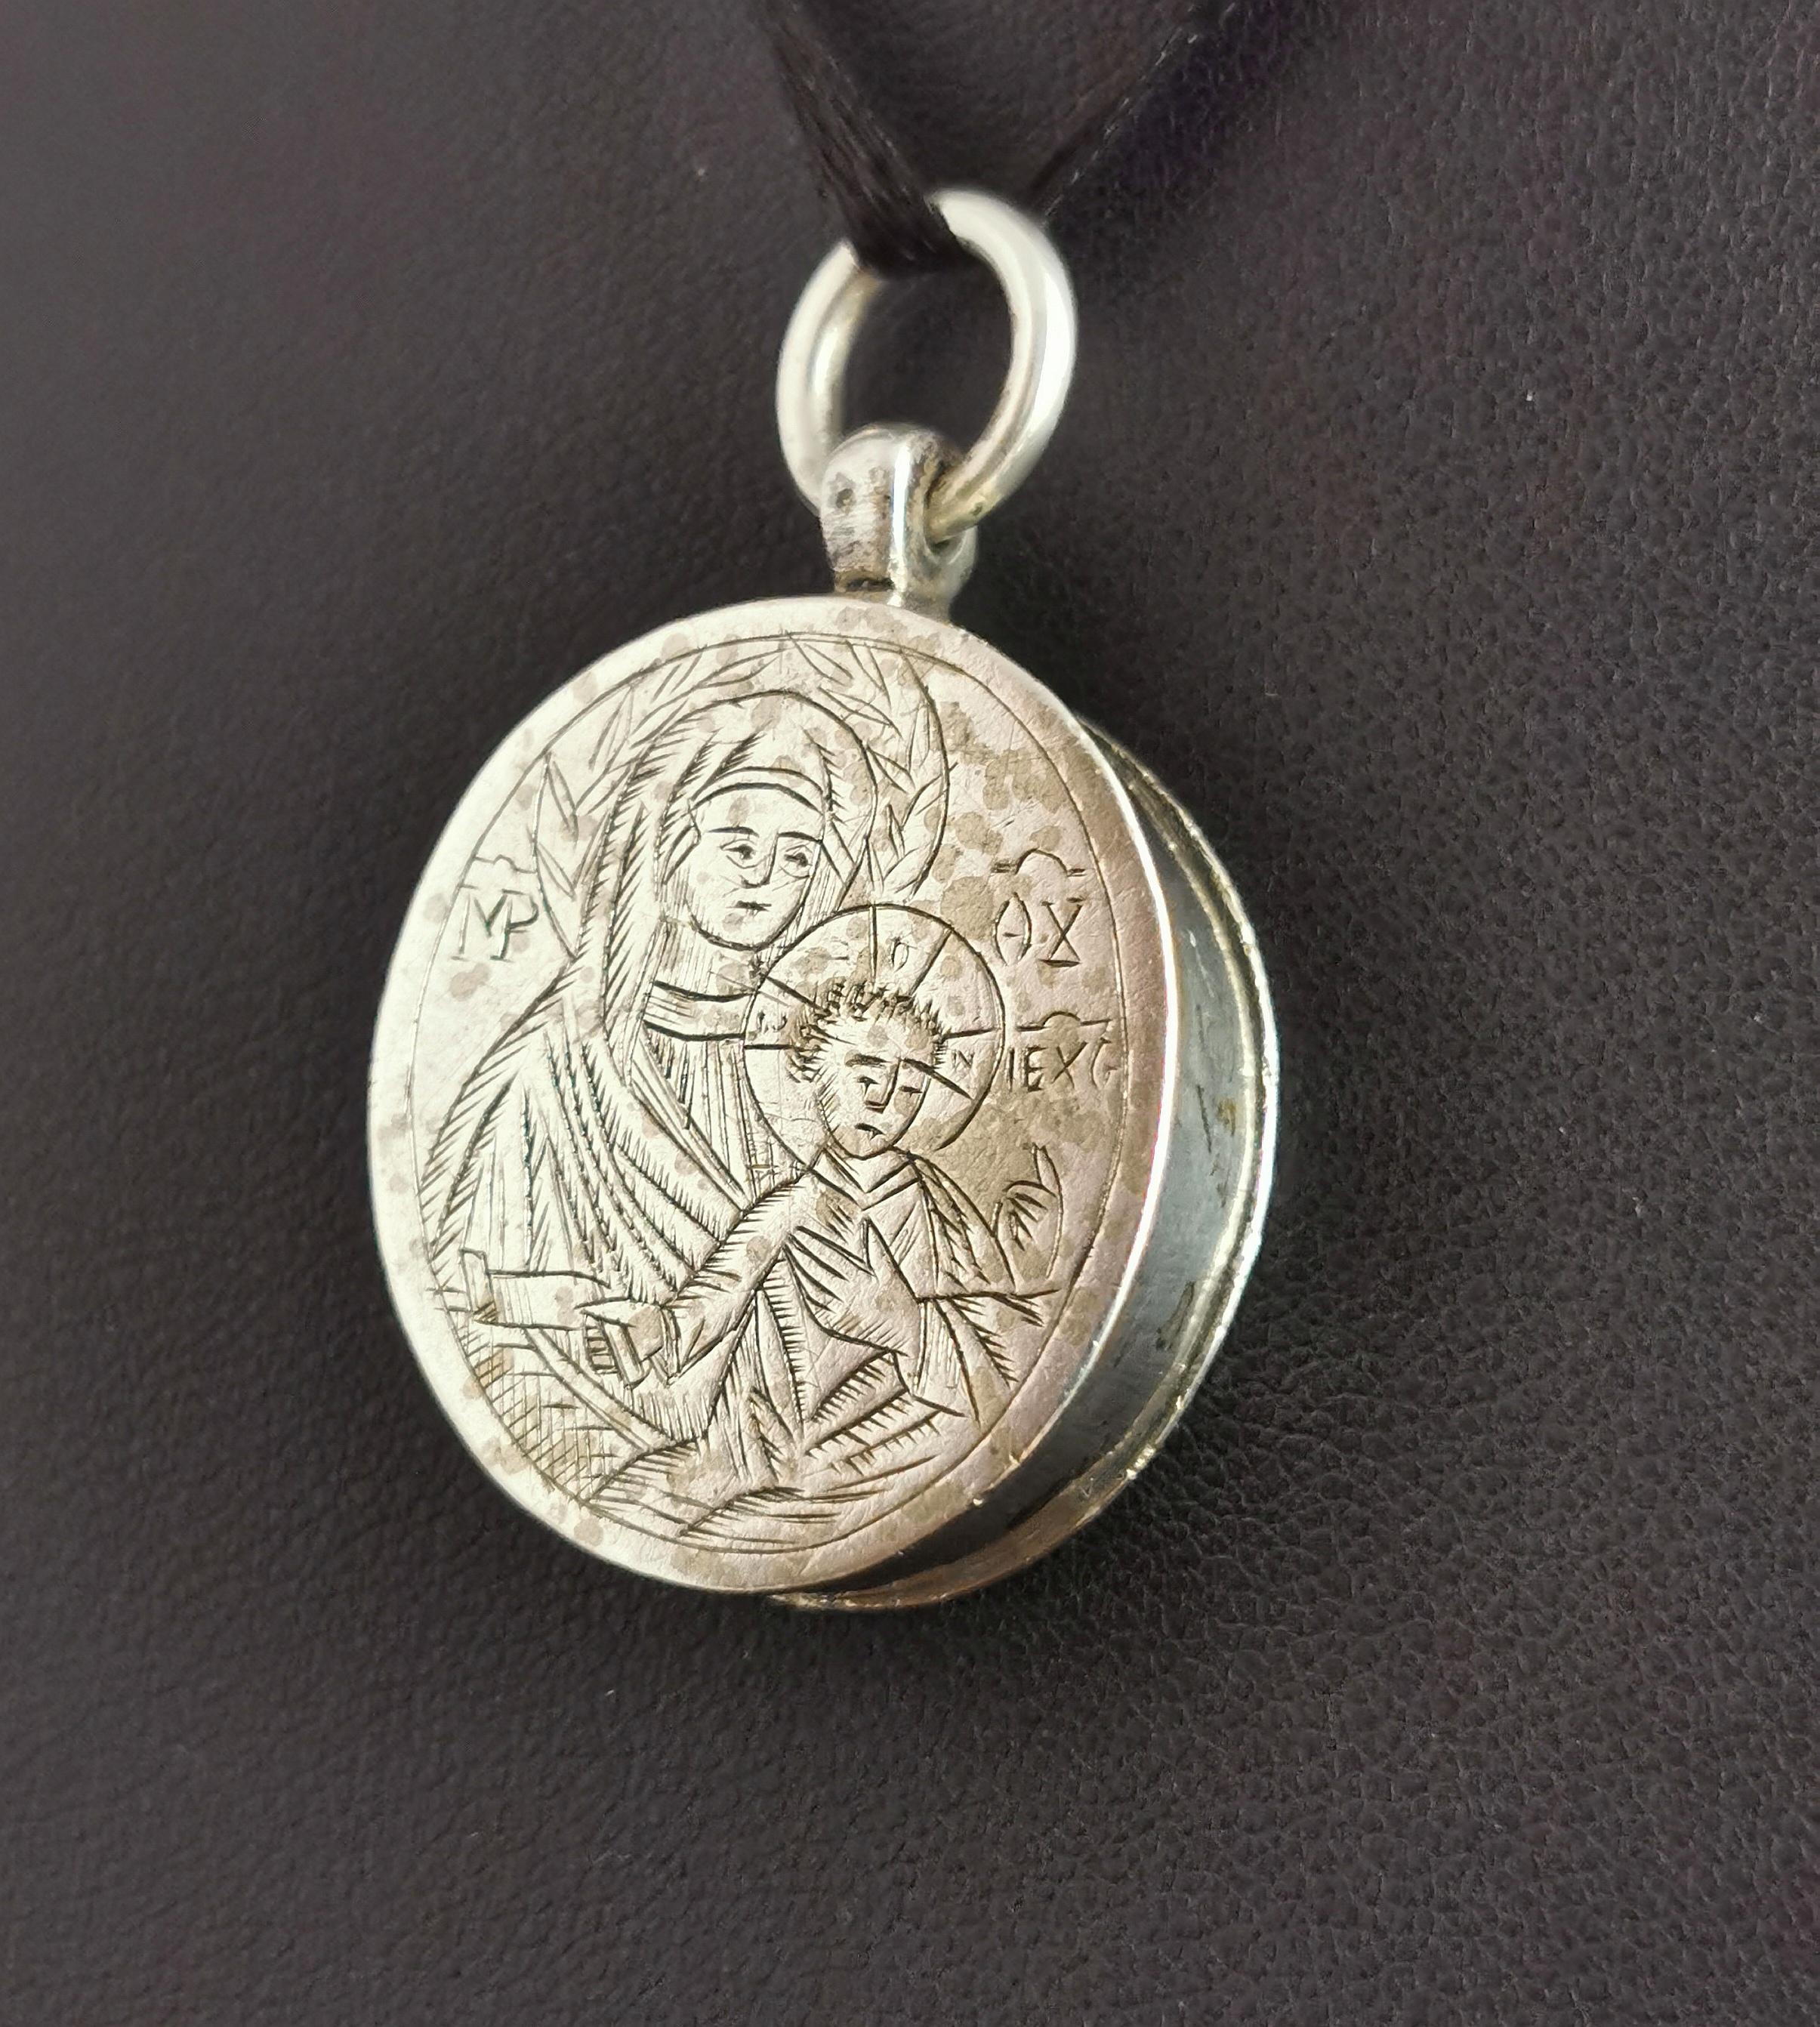 Antique Silver Reliquary Locket Pendant, Inri, Mourning, Religious For Sale 4